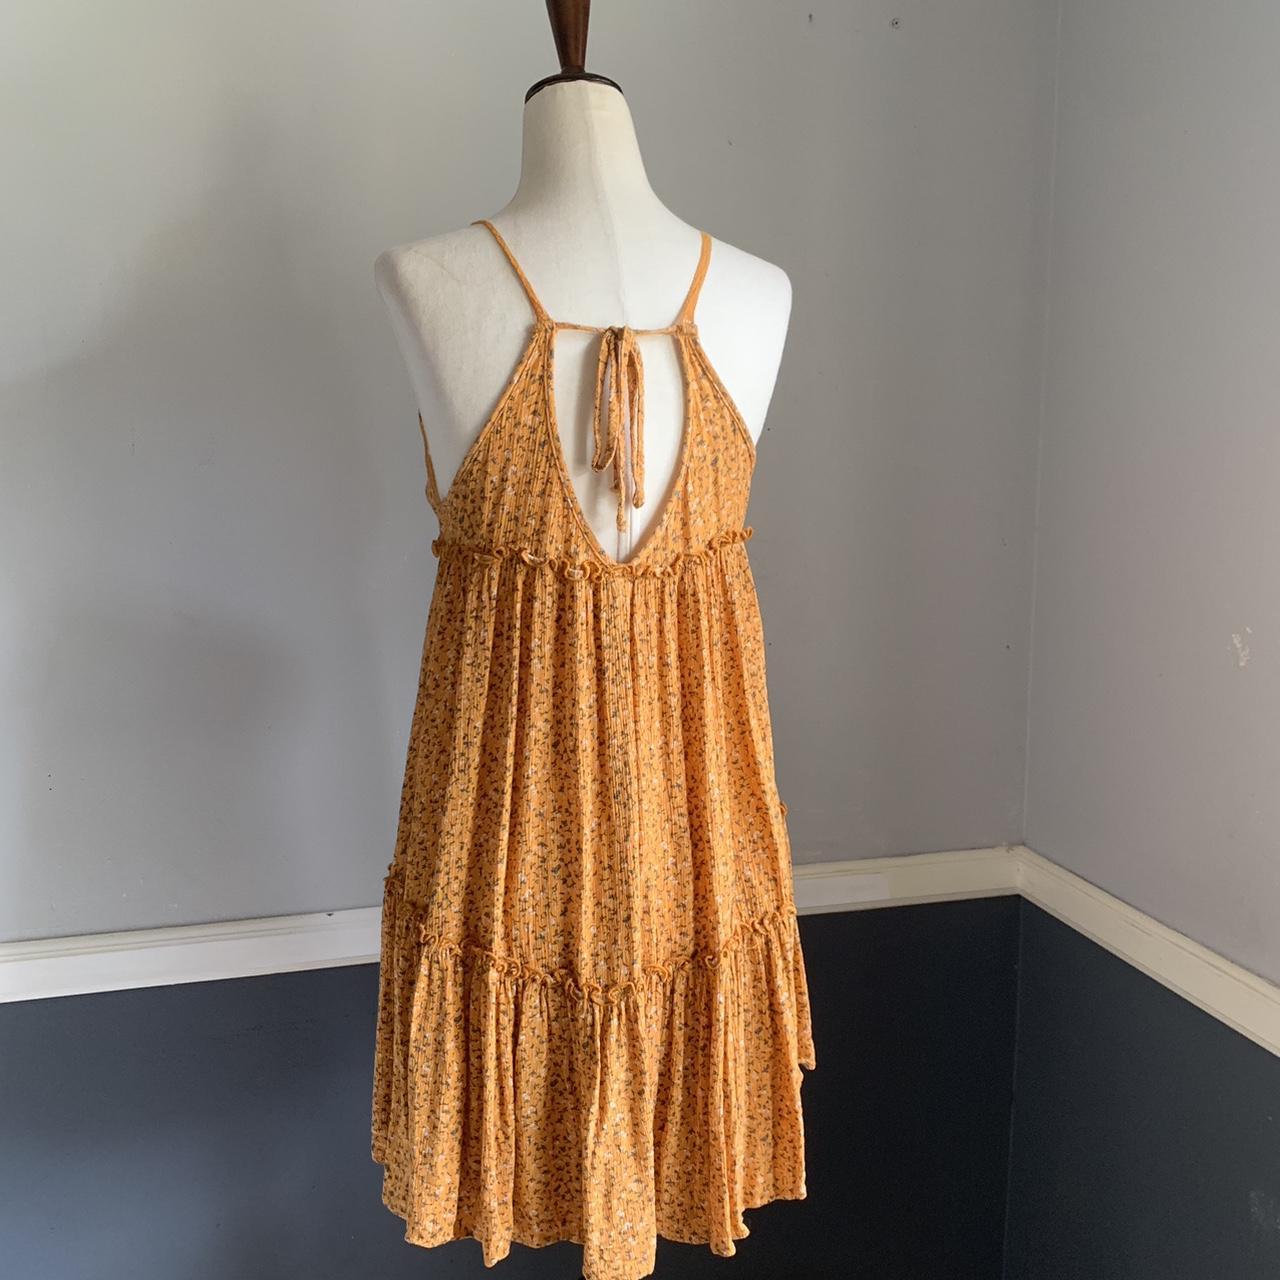 Target Women's Yellow and Tan Dress (5)